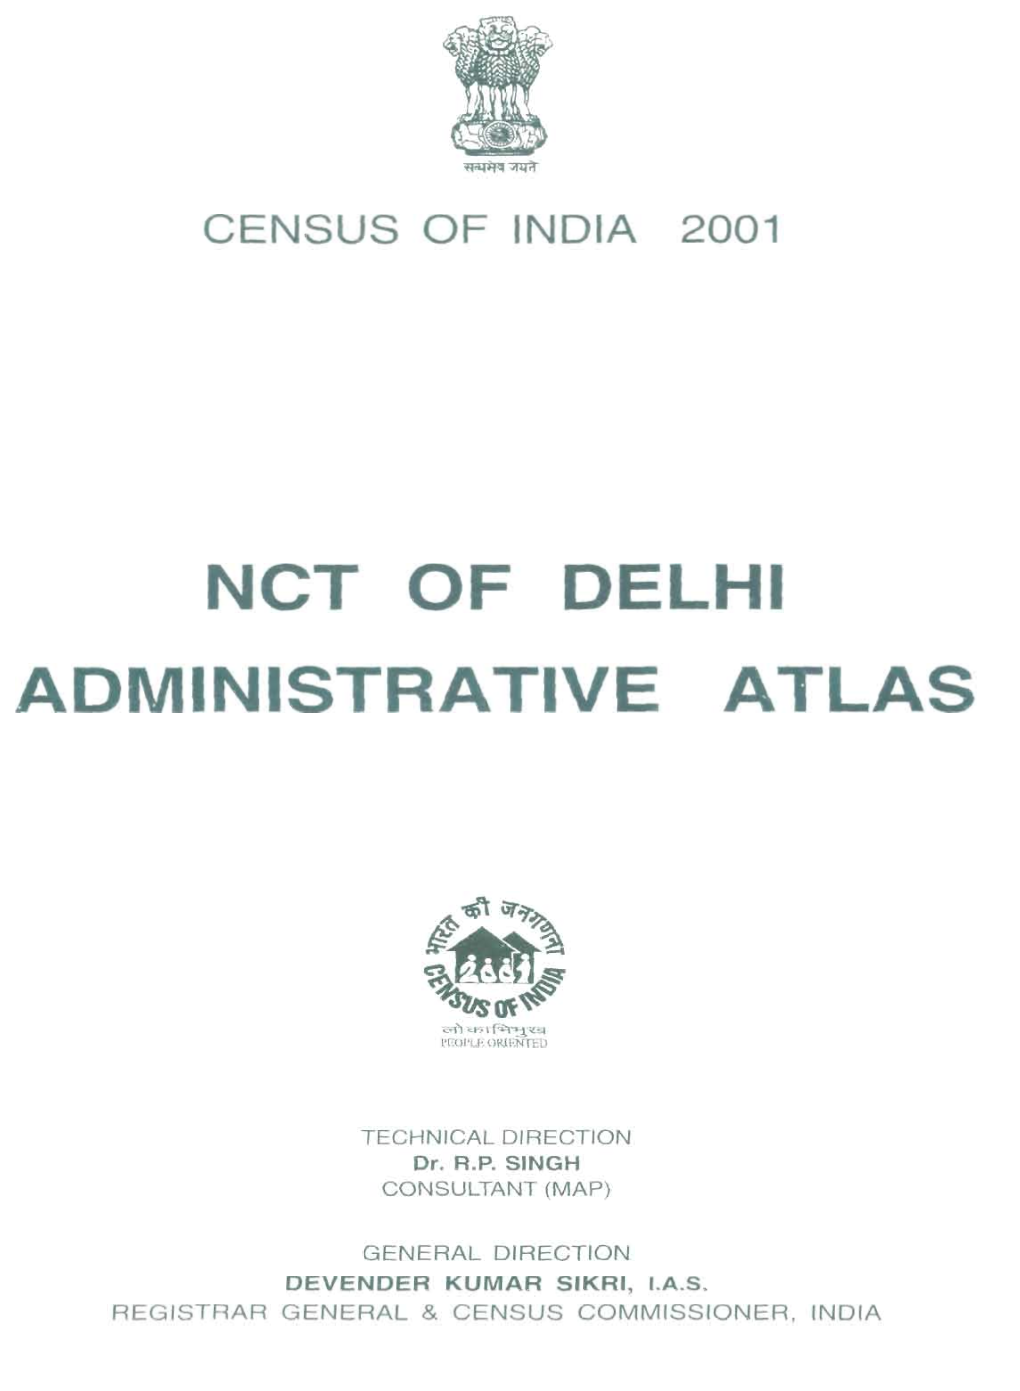 Net of DELHI ADMINISTRATIVE ATLAS